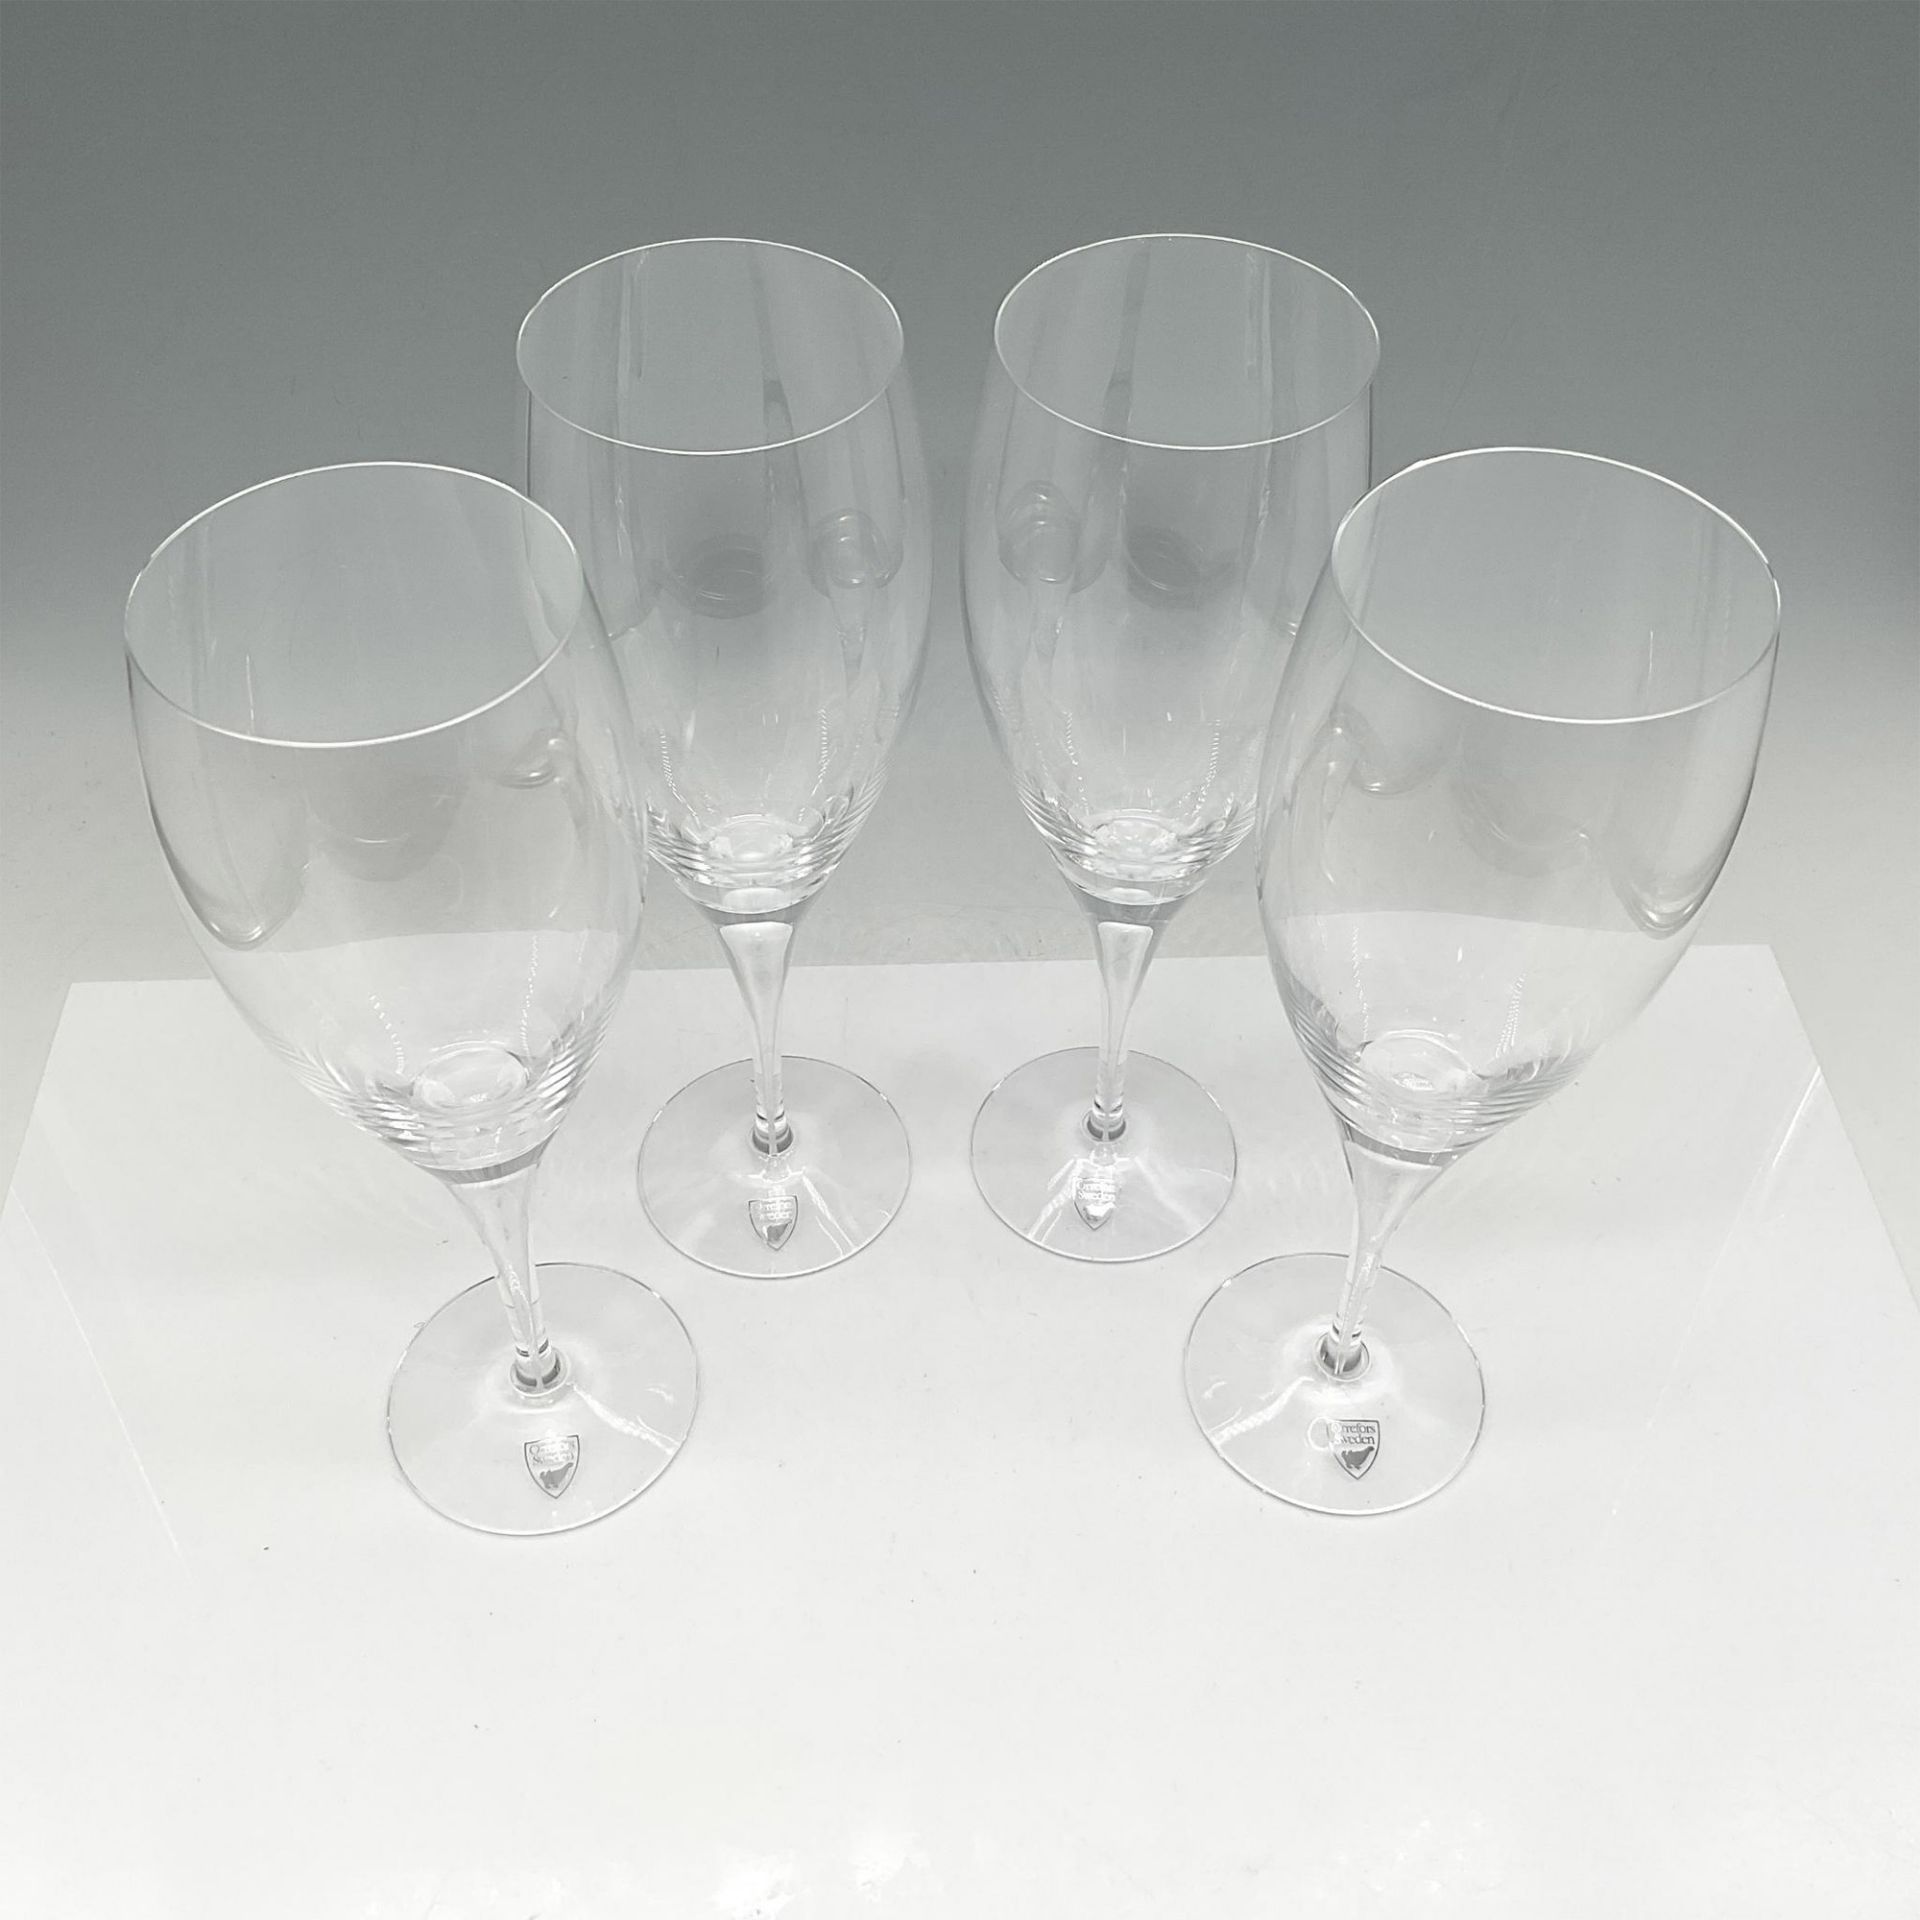 Orrefors Crystal Intermezzo Satin Wine Glasses, Set of 4 - Image 2 of 4